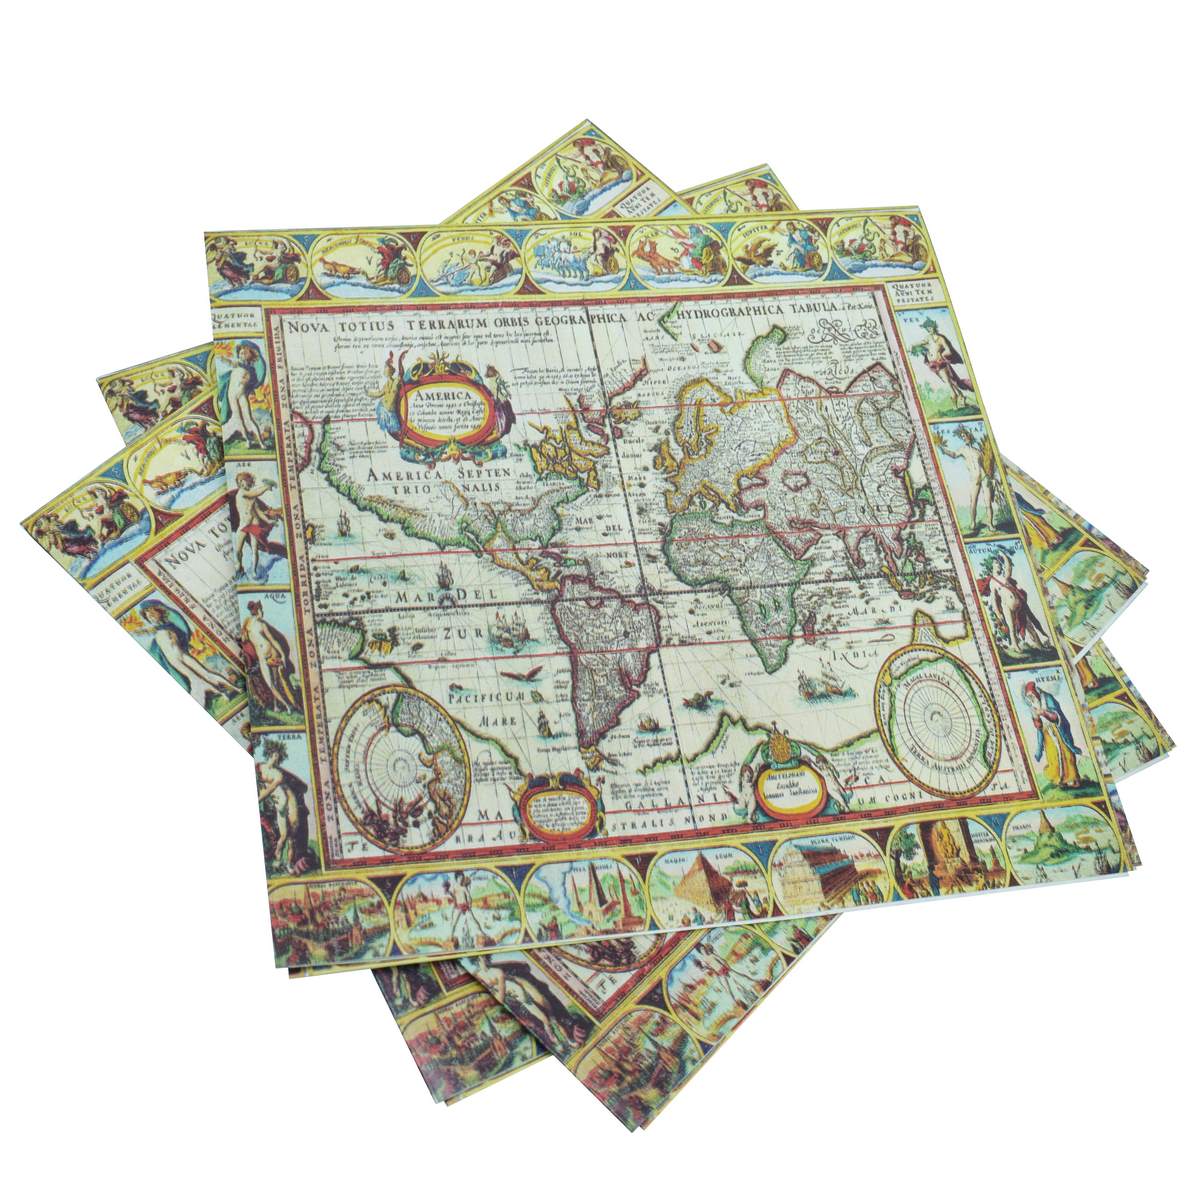 jags-mumbai Decoupage Jags Decoupage Paper Vintage World Map JDPG-32